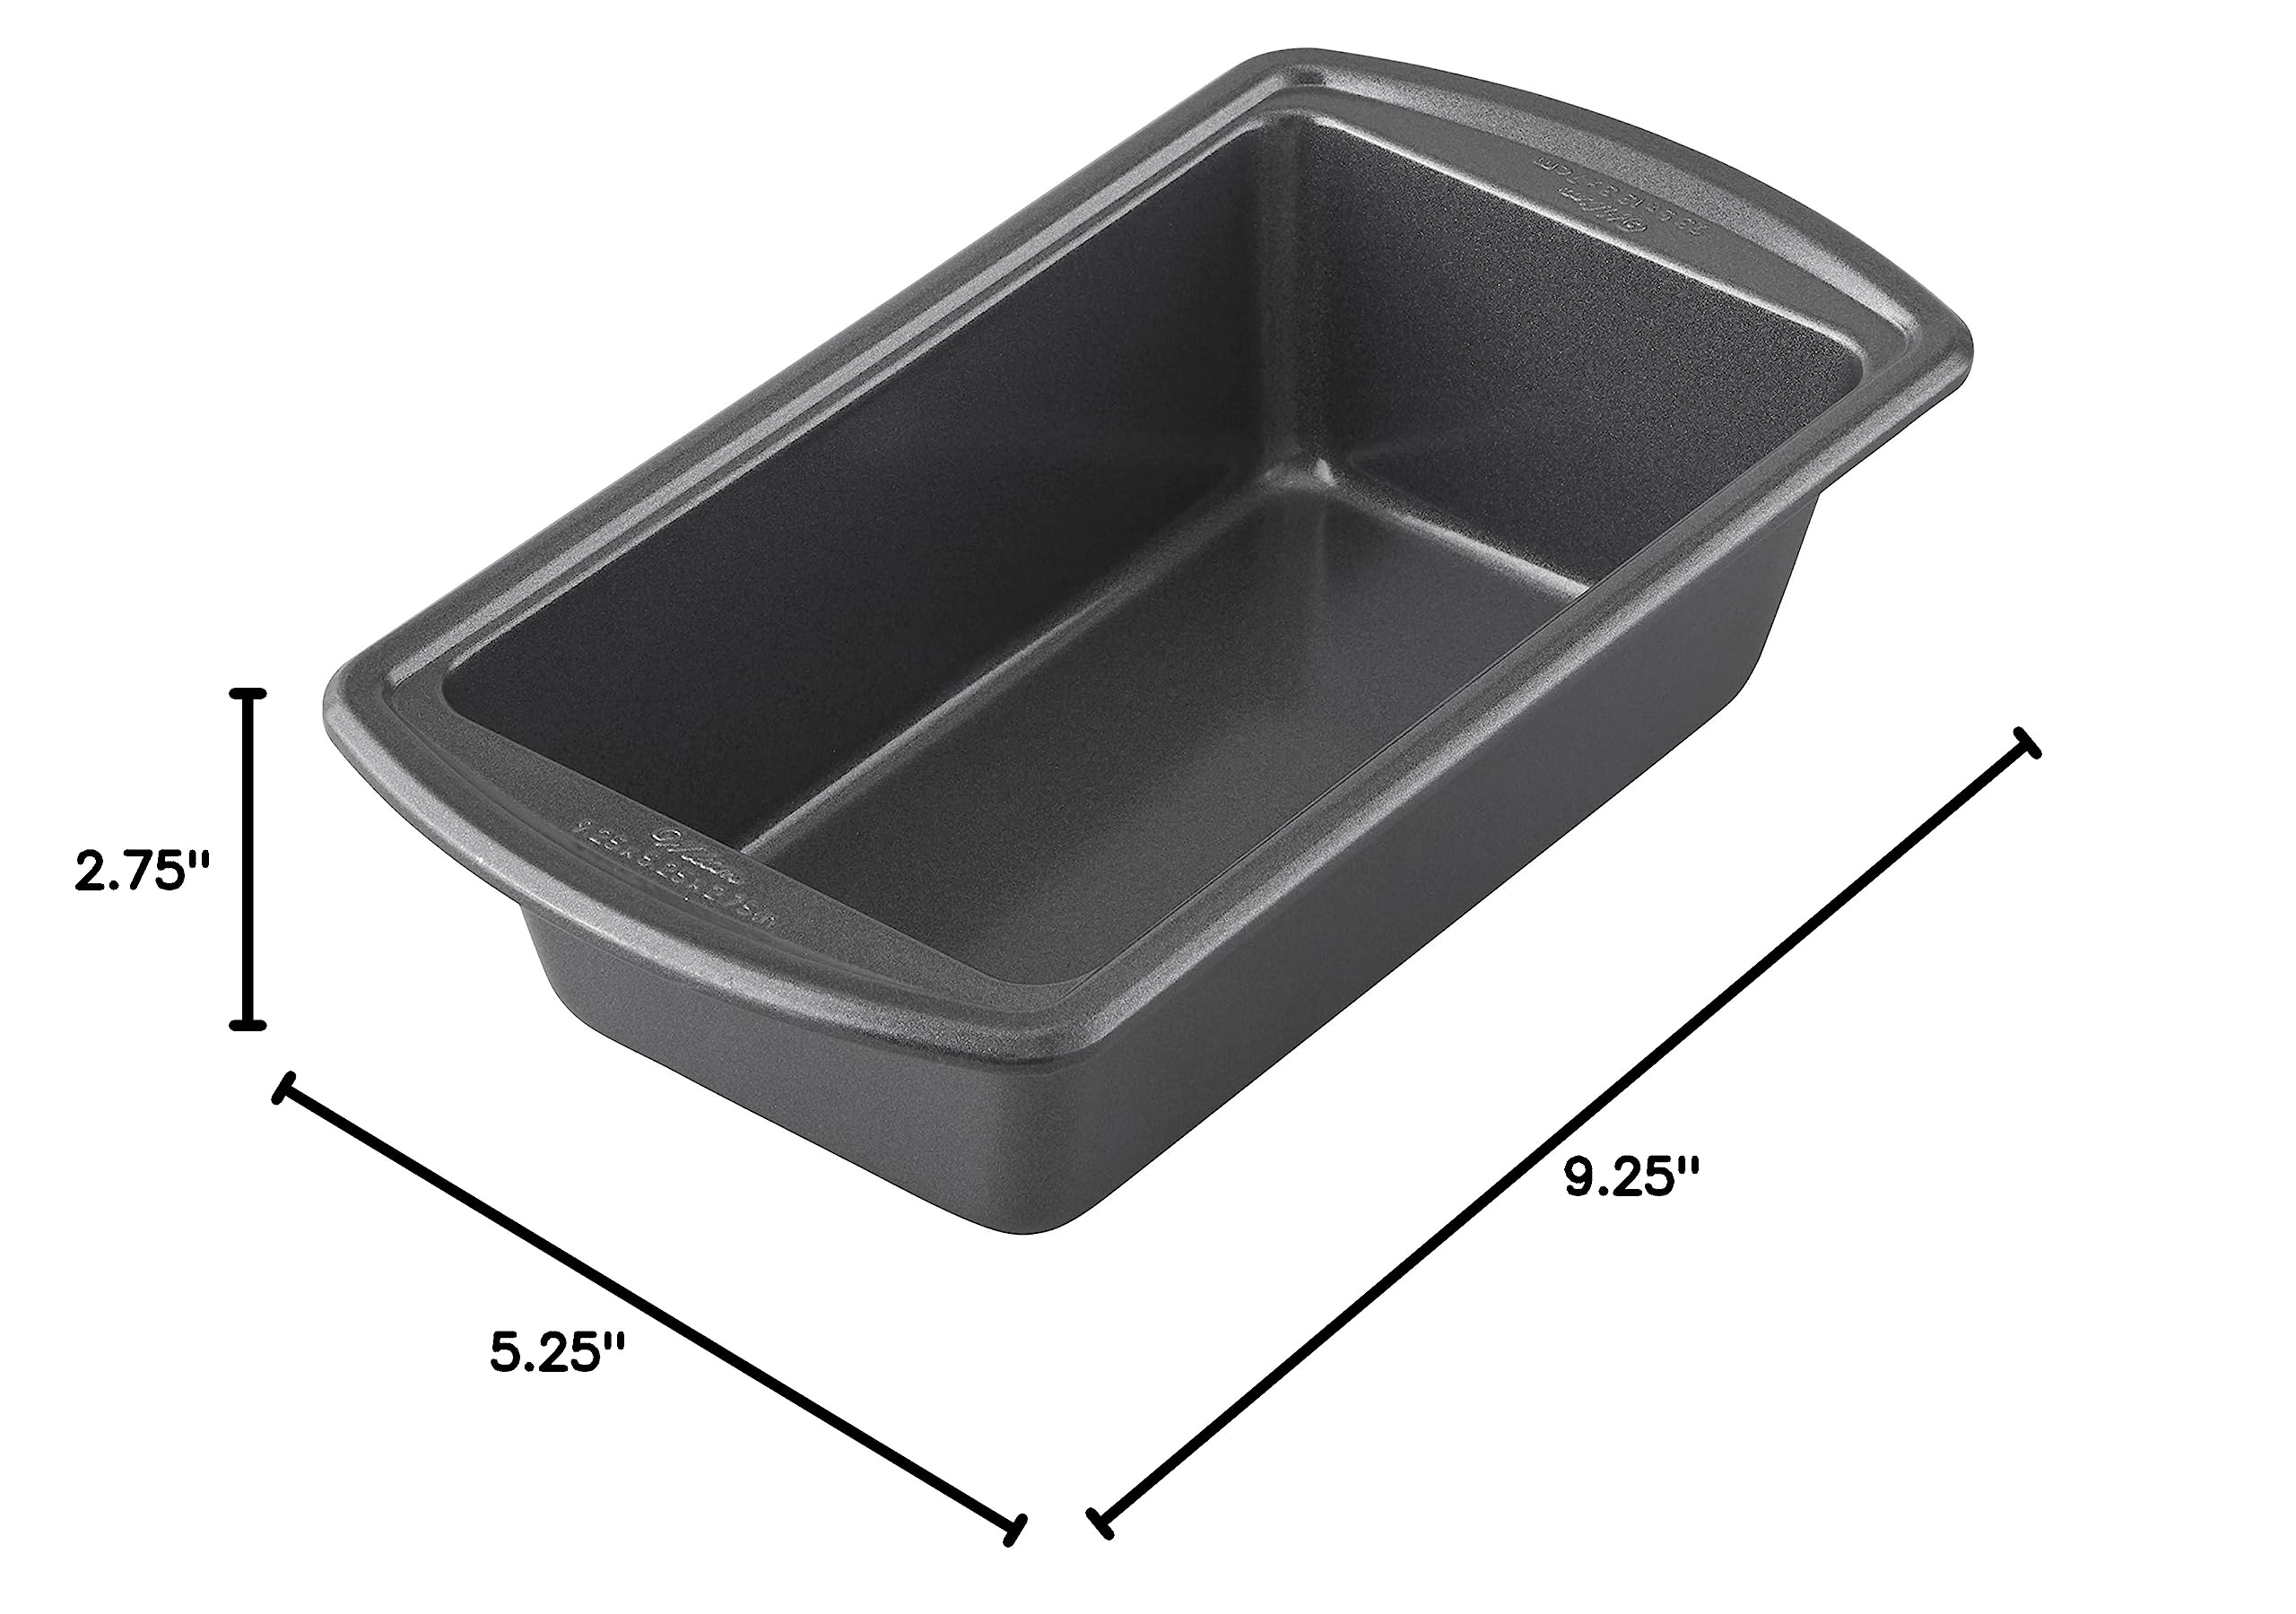 Wilton Advance Select Premium Non-Stick Loaf Pan, 9.25 x 5.25 Inches, Steel, Silver